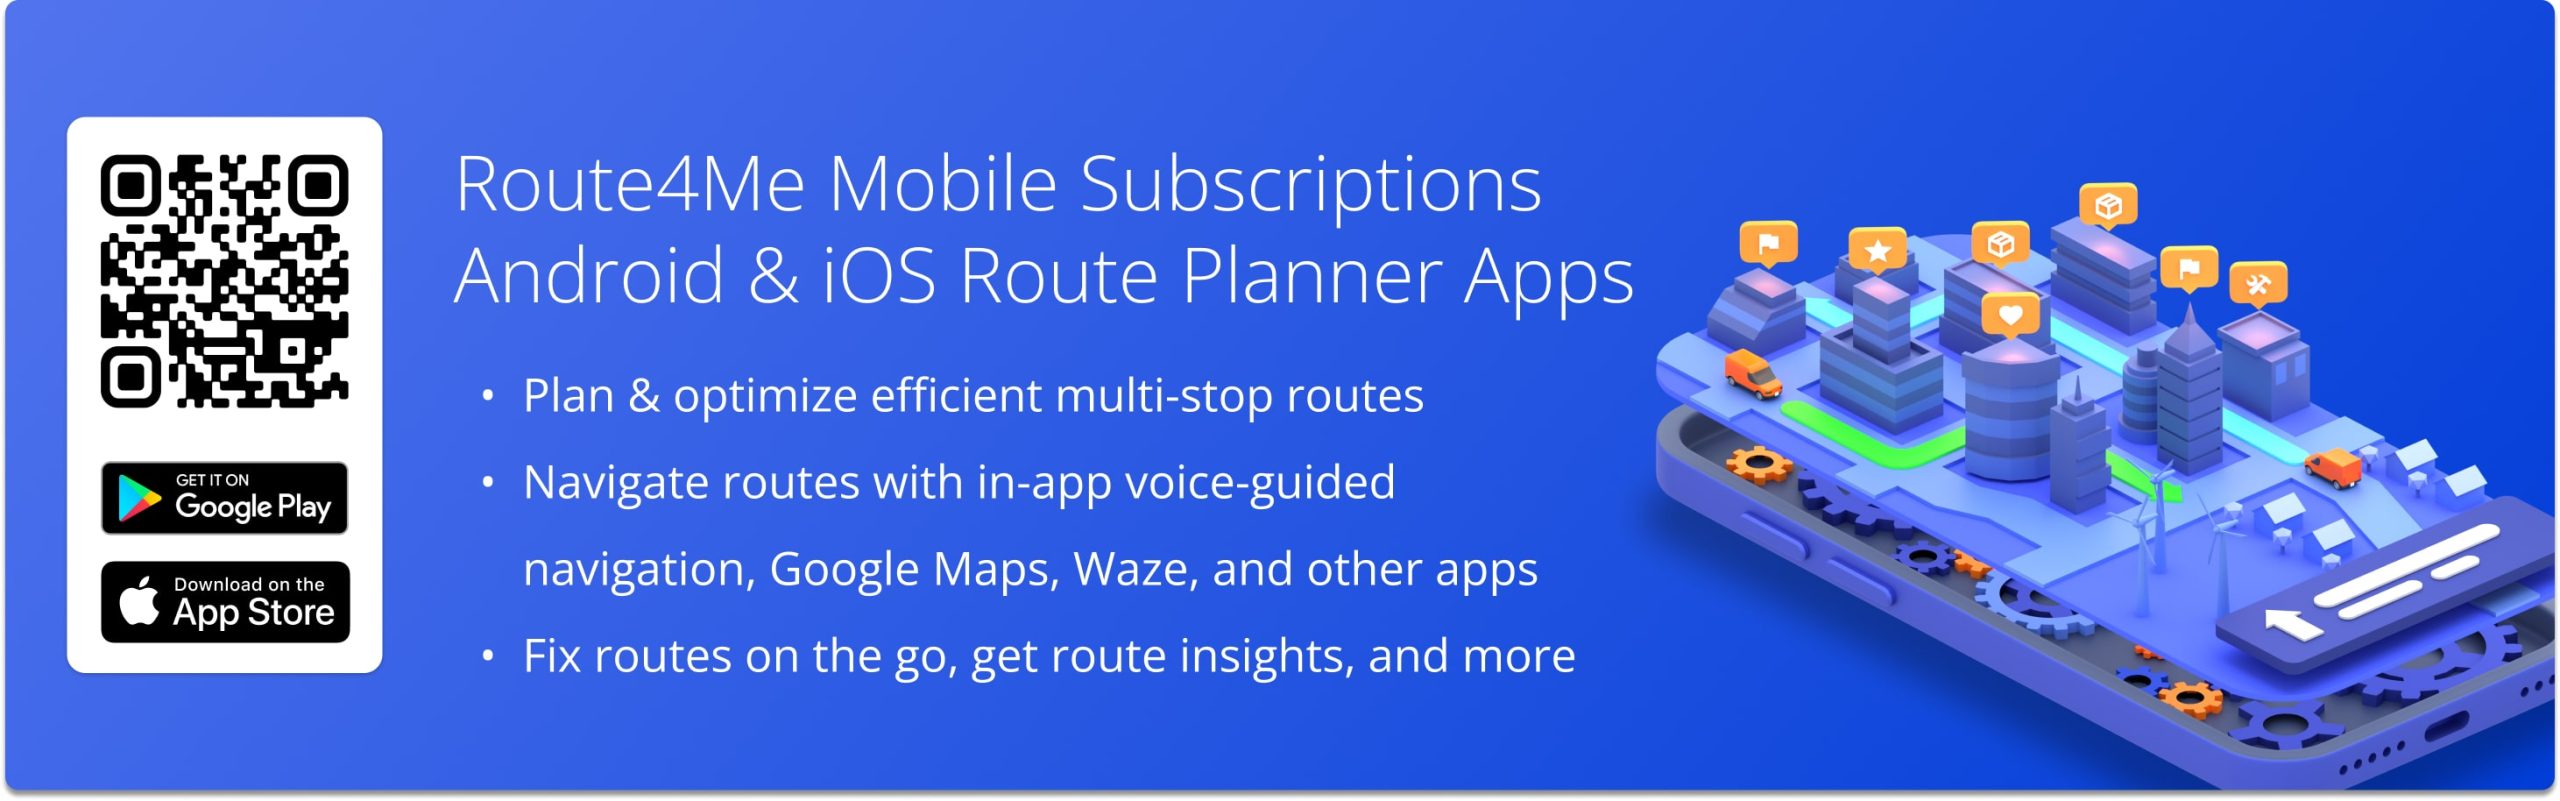 Route4Me Marketplace Subscriptions include Web Platform access and Mobile Driver App connectivity. Route4Me Mobile Subscriptions include only Mobile App features and don't include Route4Me Web Platform access.